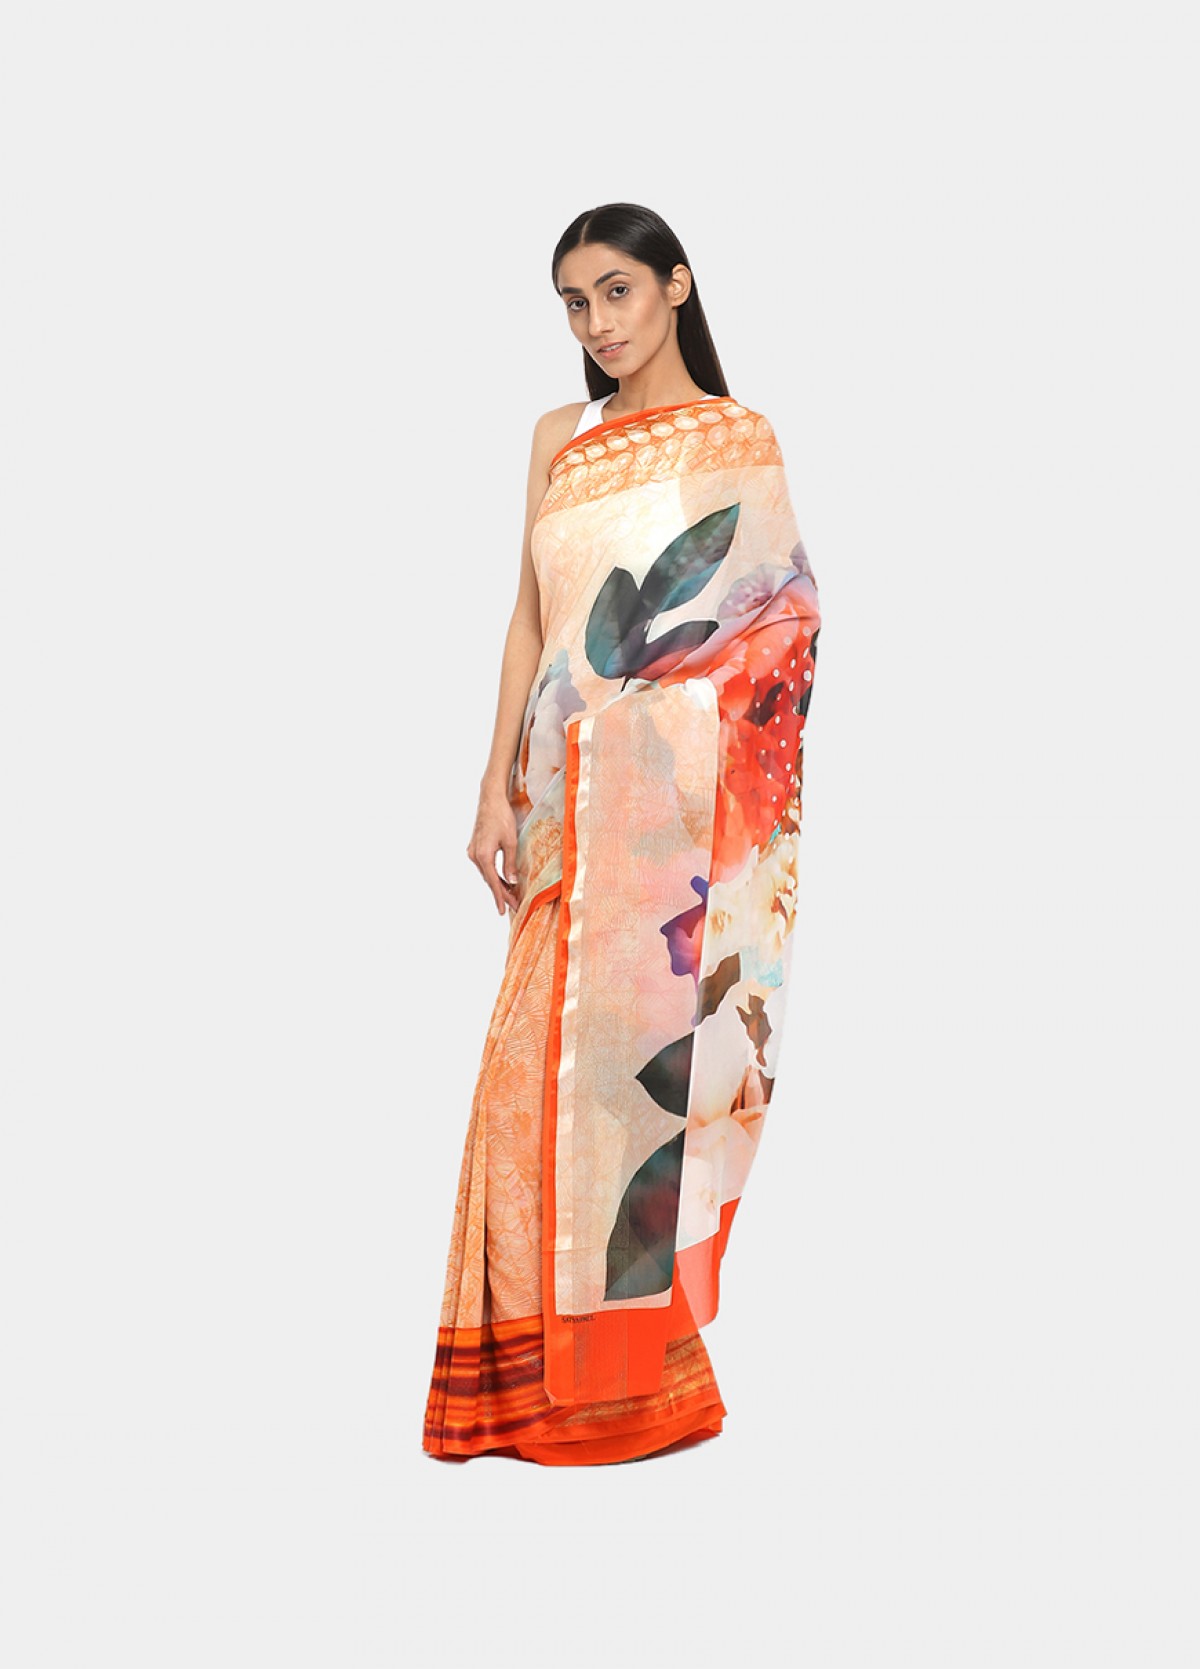 The Regal Blush Sari